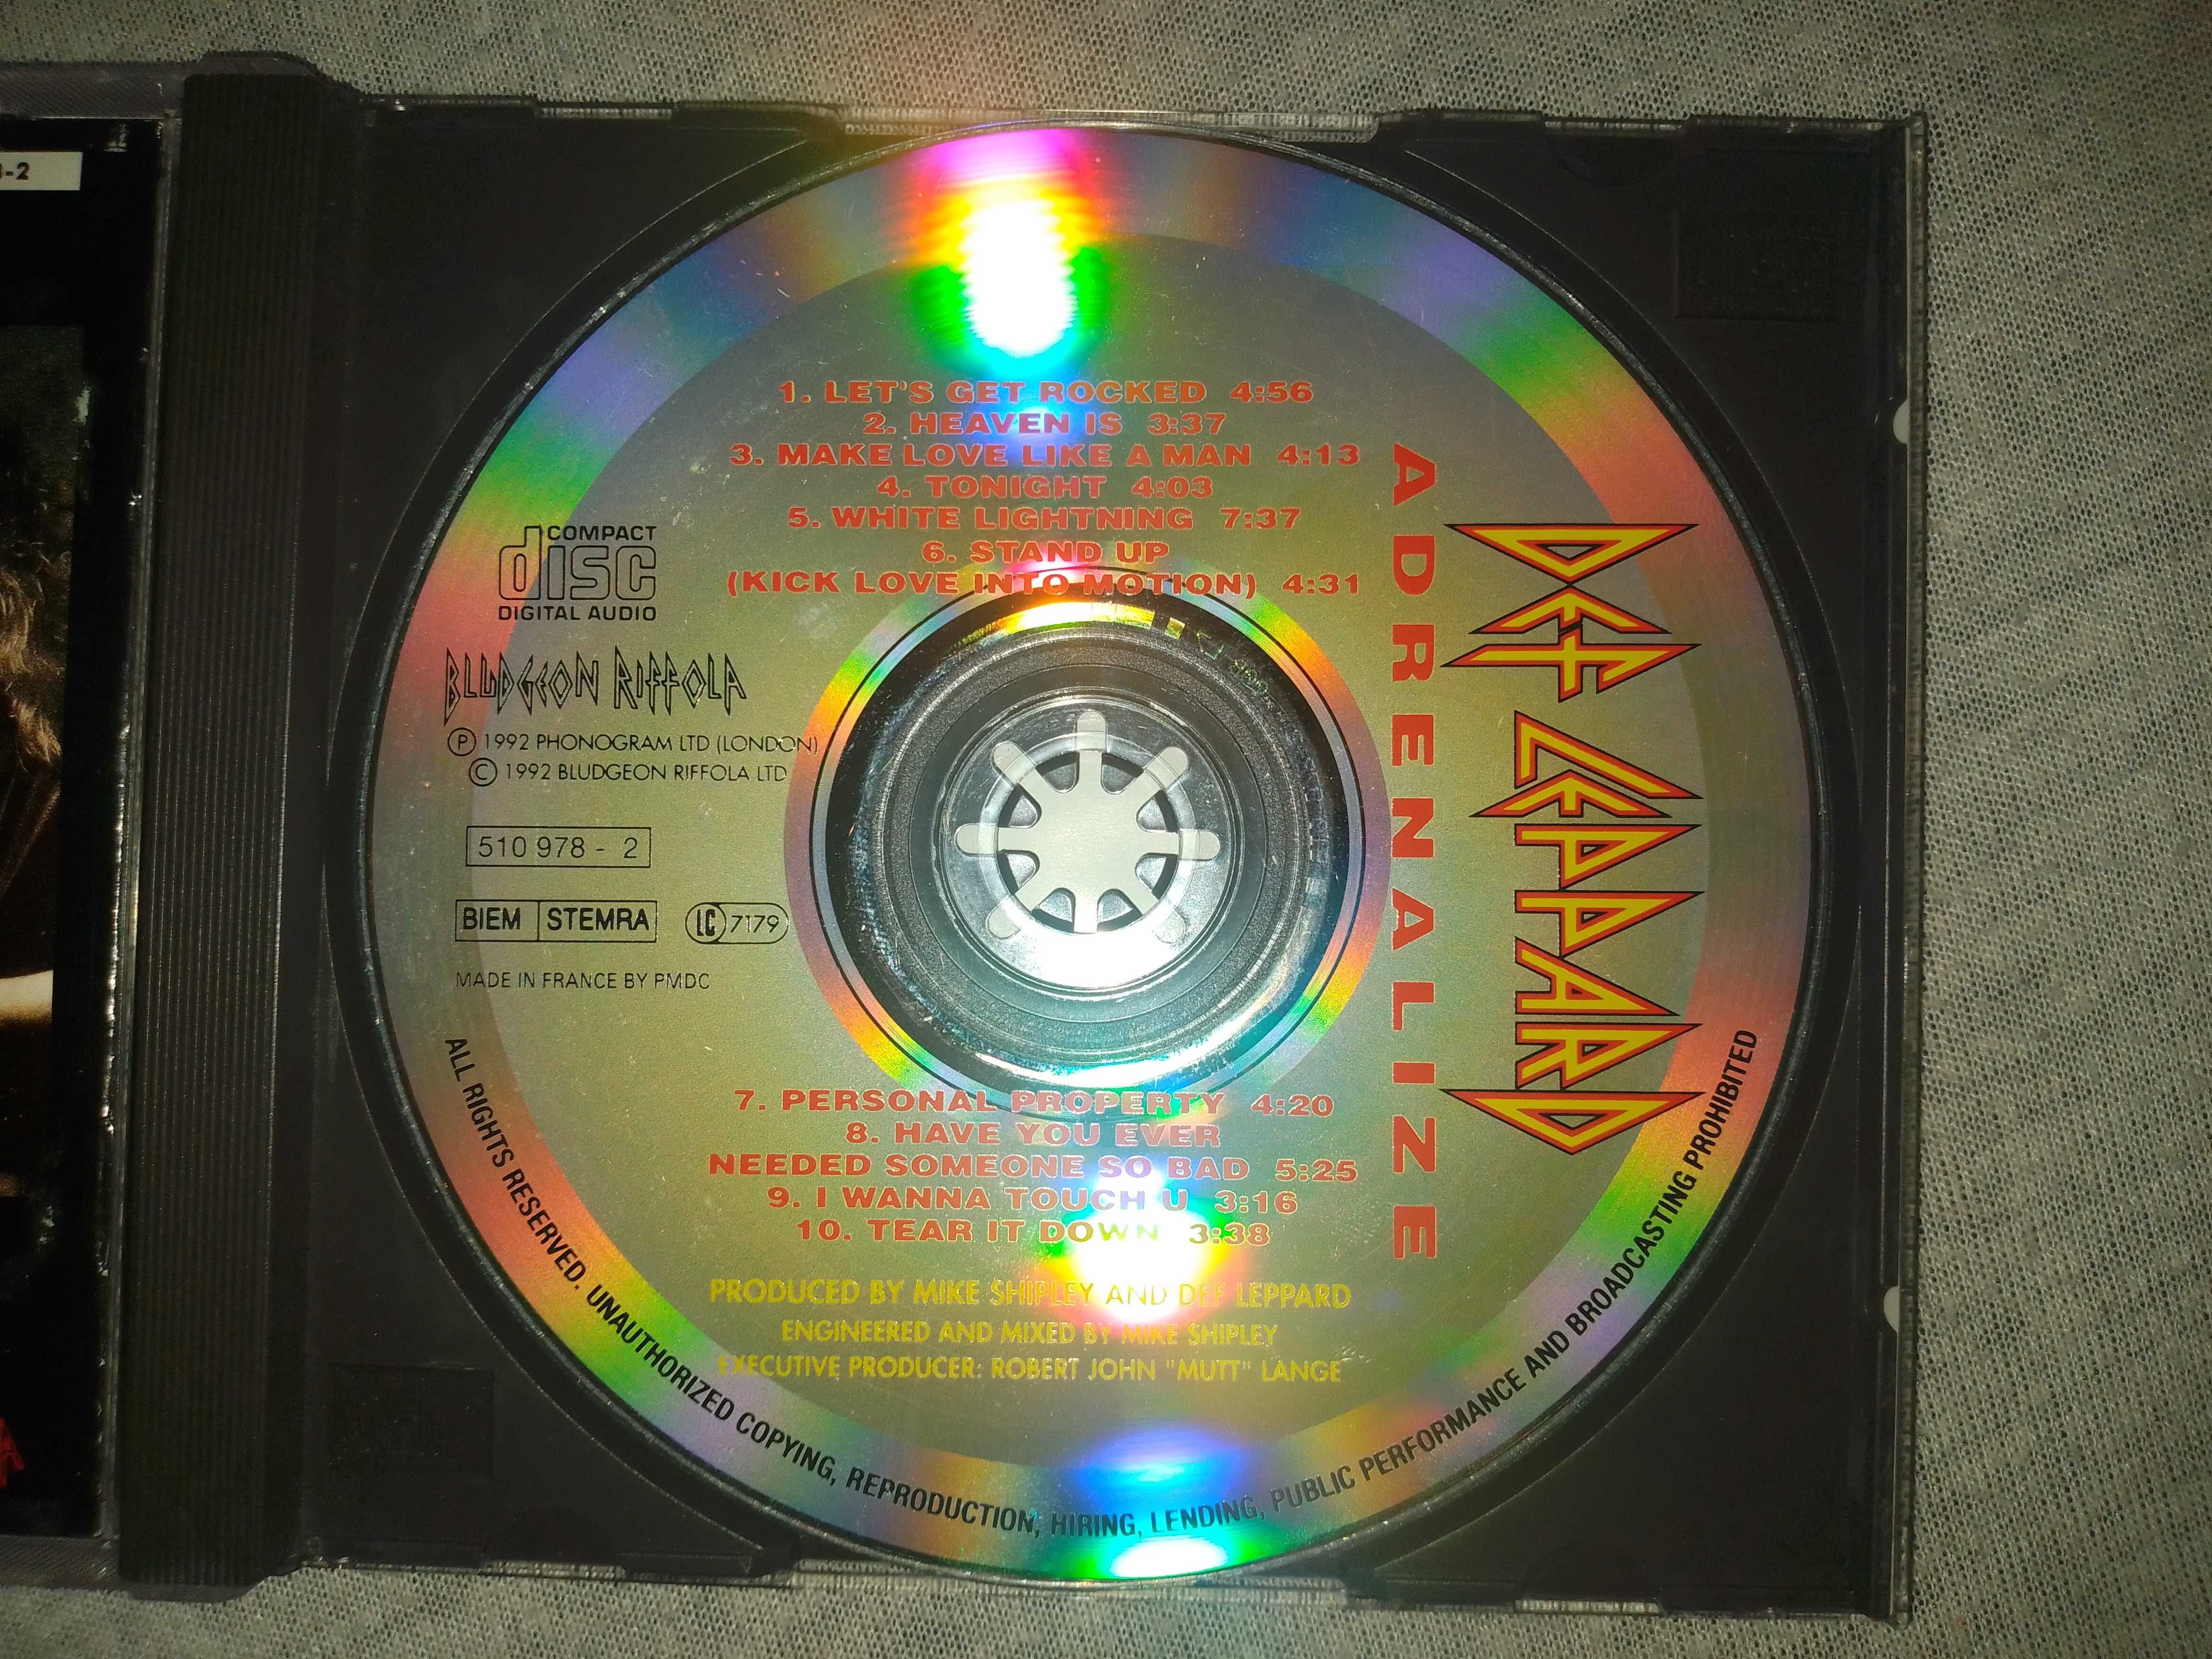 Def Leppard "Adrenalize" фирменный CD Made In France.